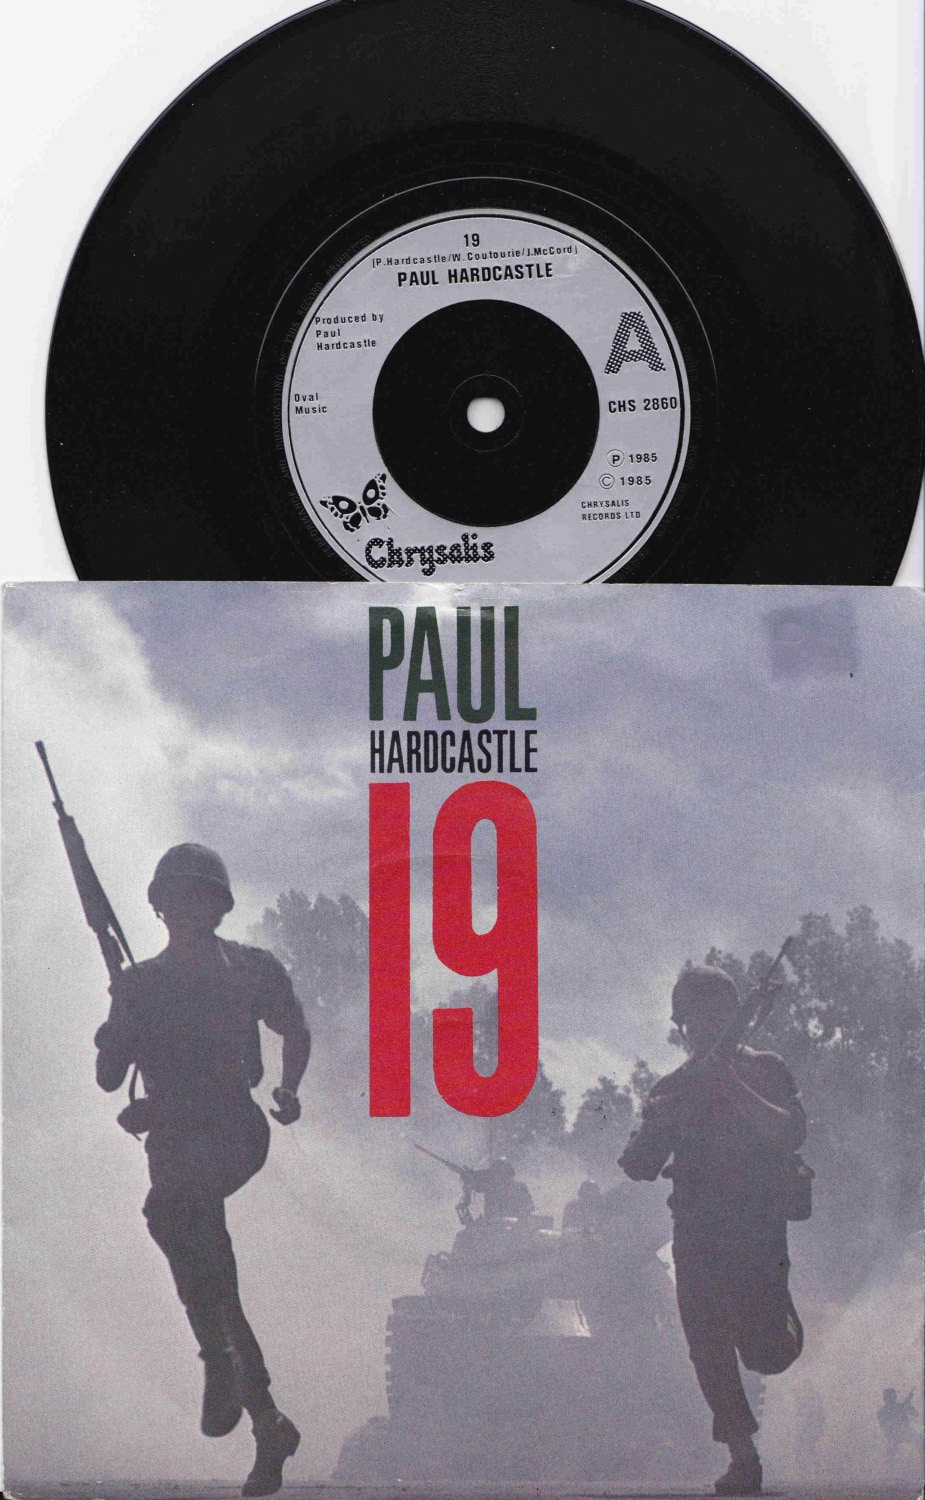 Paul hardcastle. Paul Hardcastle 19. 1985 Records. Hardcastle, Paul "19 (2lp)".